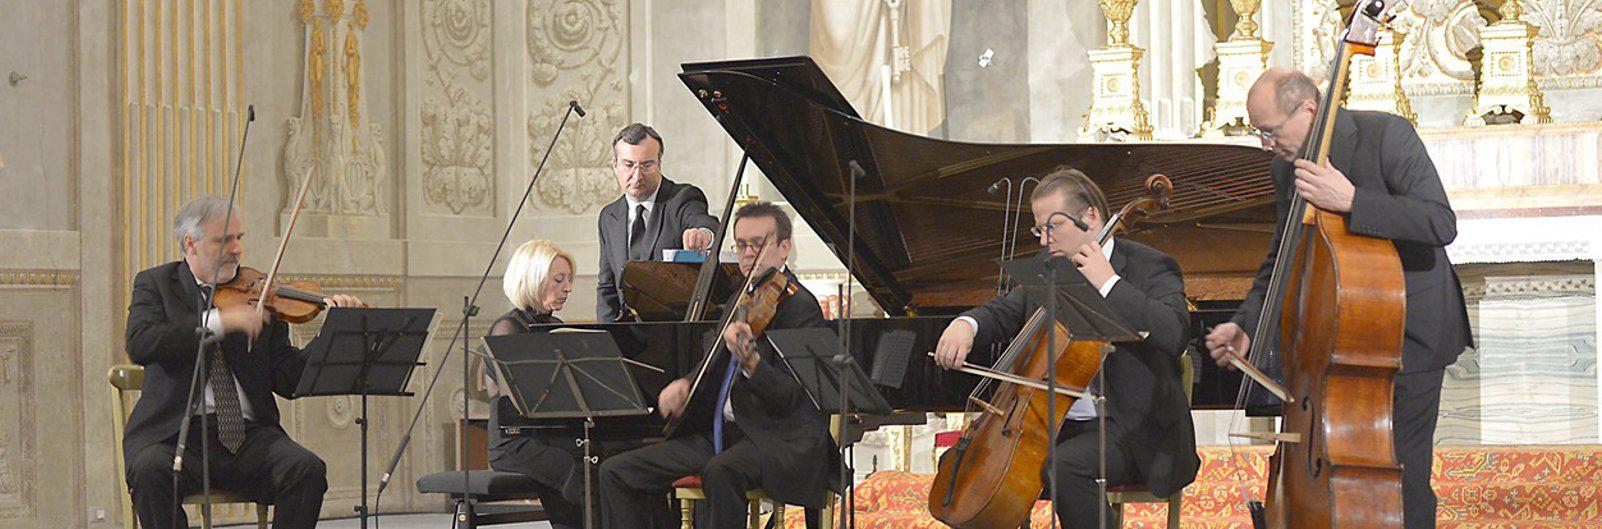 una orchestra esegue alla Cappella Paolina